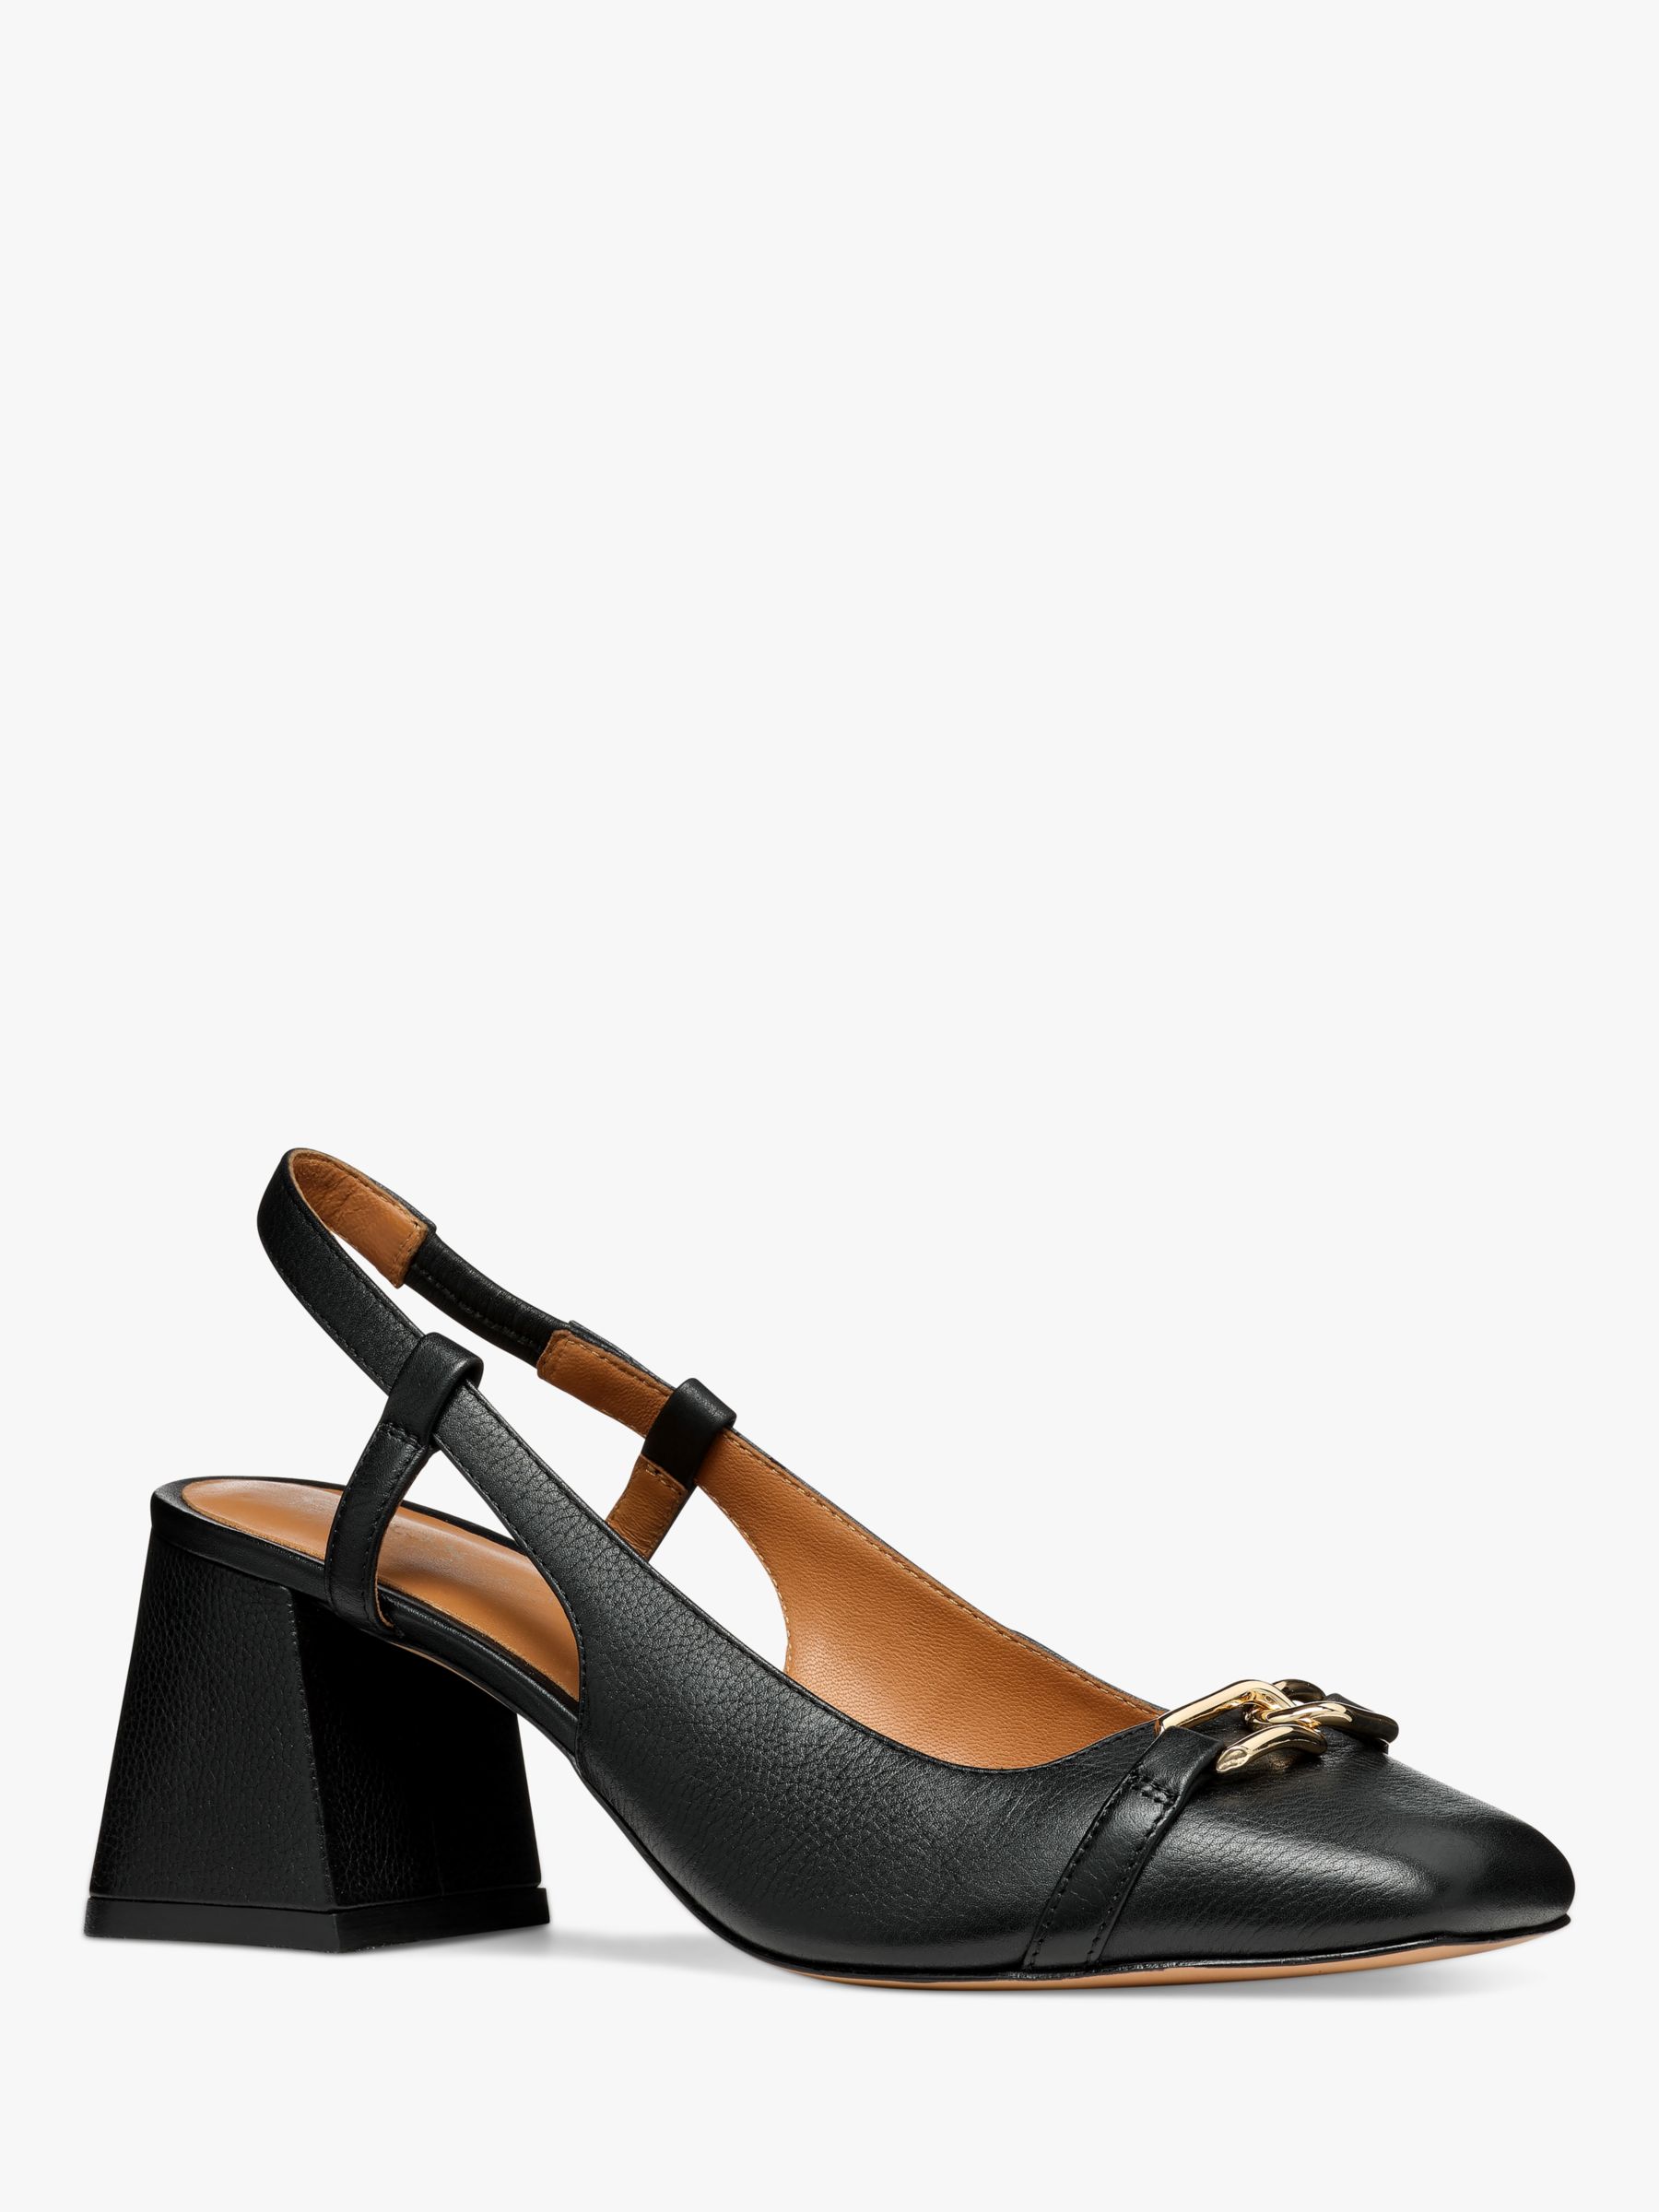 Geox Coronilla Square Toe Leather Slingback Court Shoes, Black, EU36